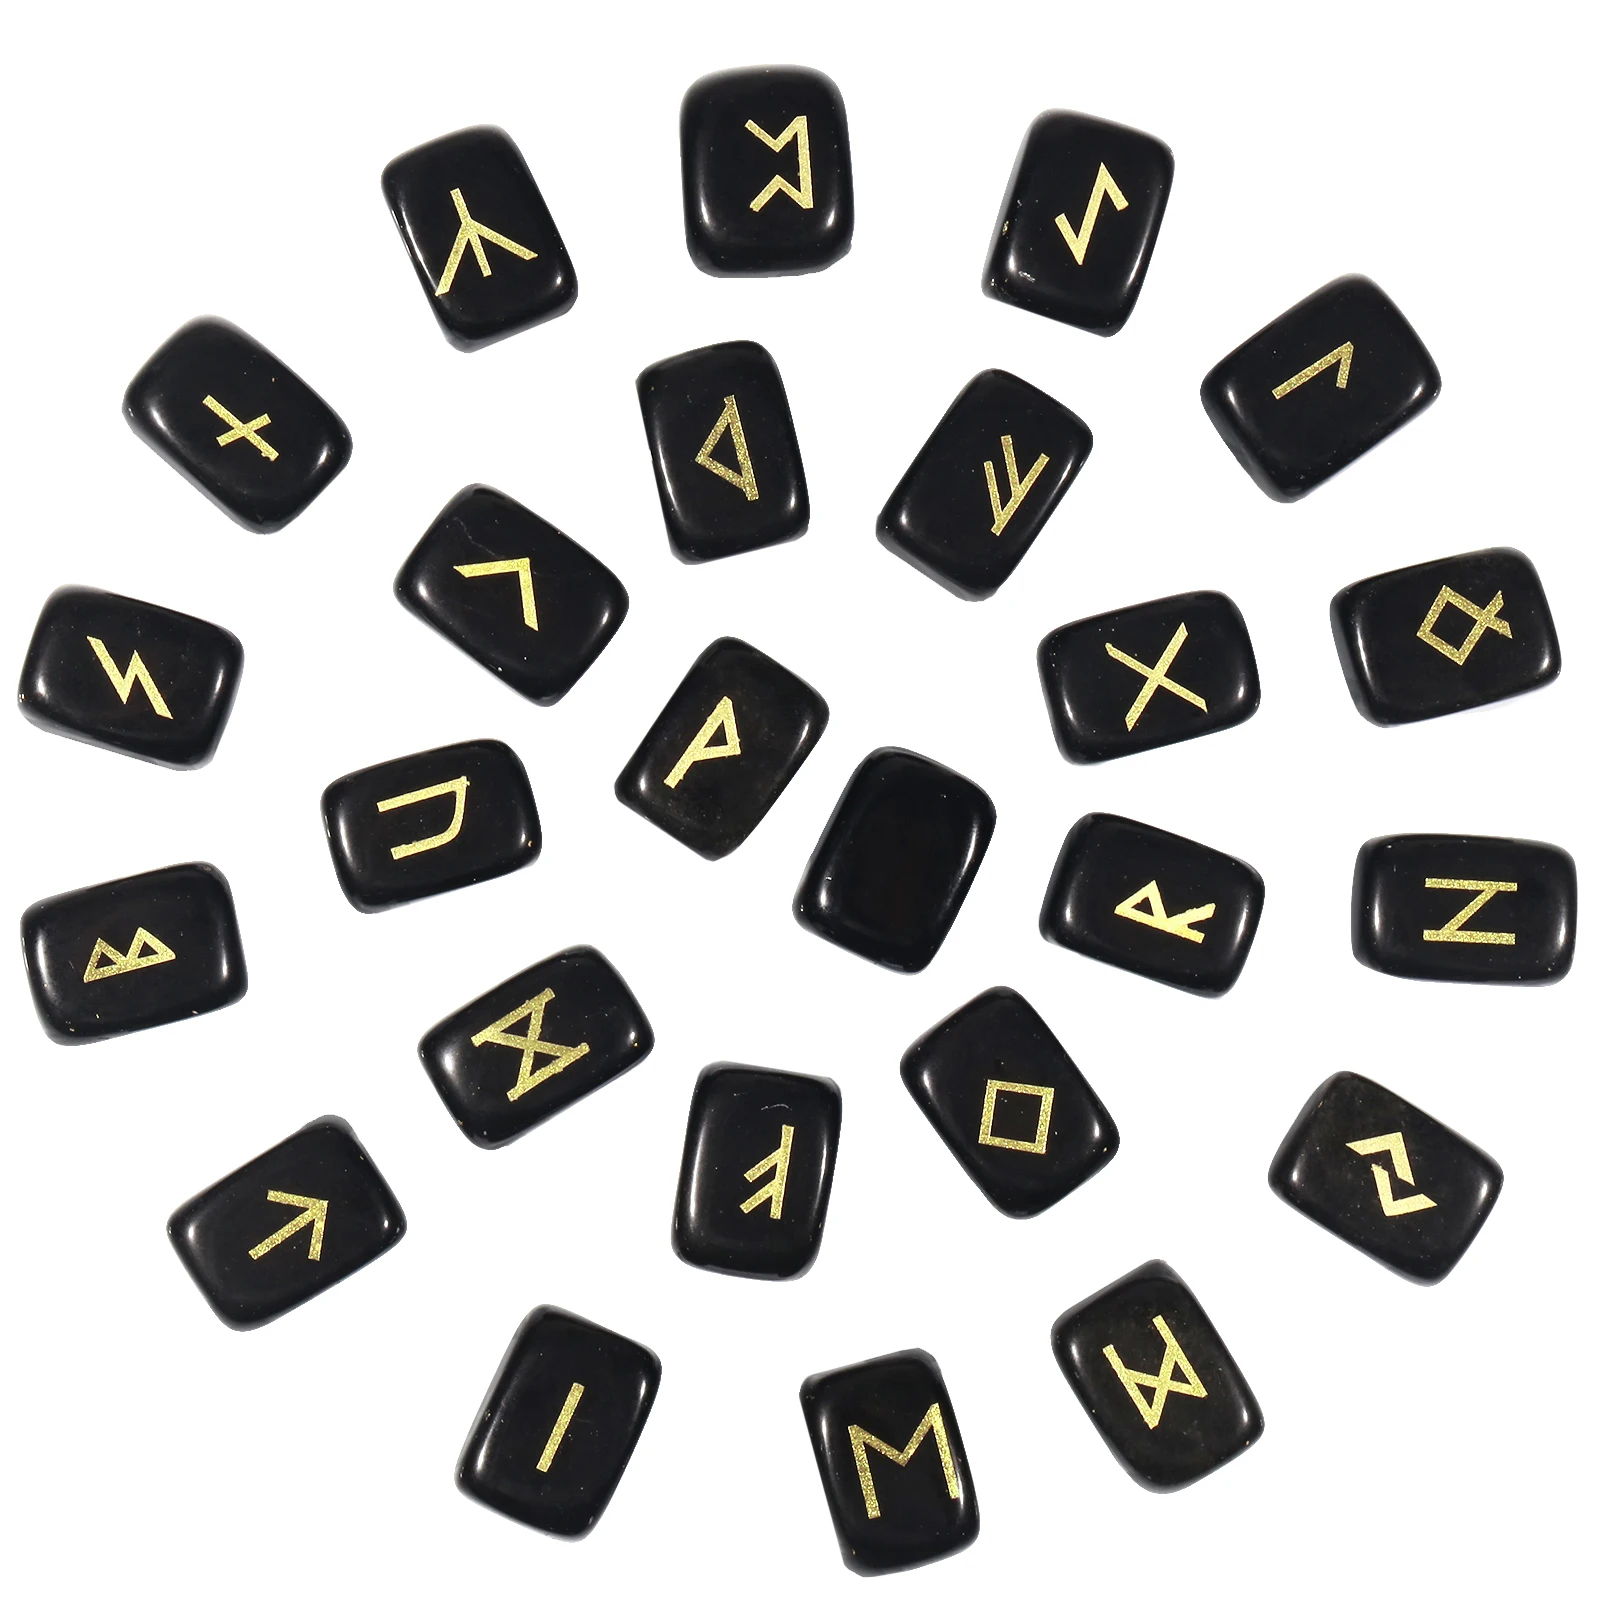 25pcs Black Obsidian Rune Stones Set With Engraved Elder Futhark Alphabet Irregular Crystal Stone For Meditation Divination